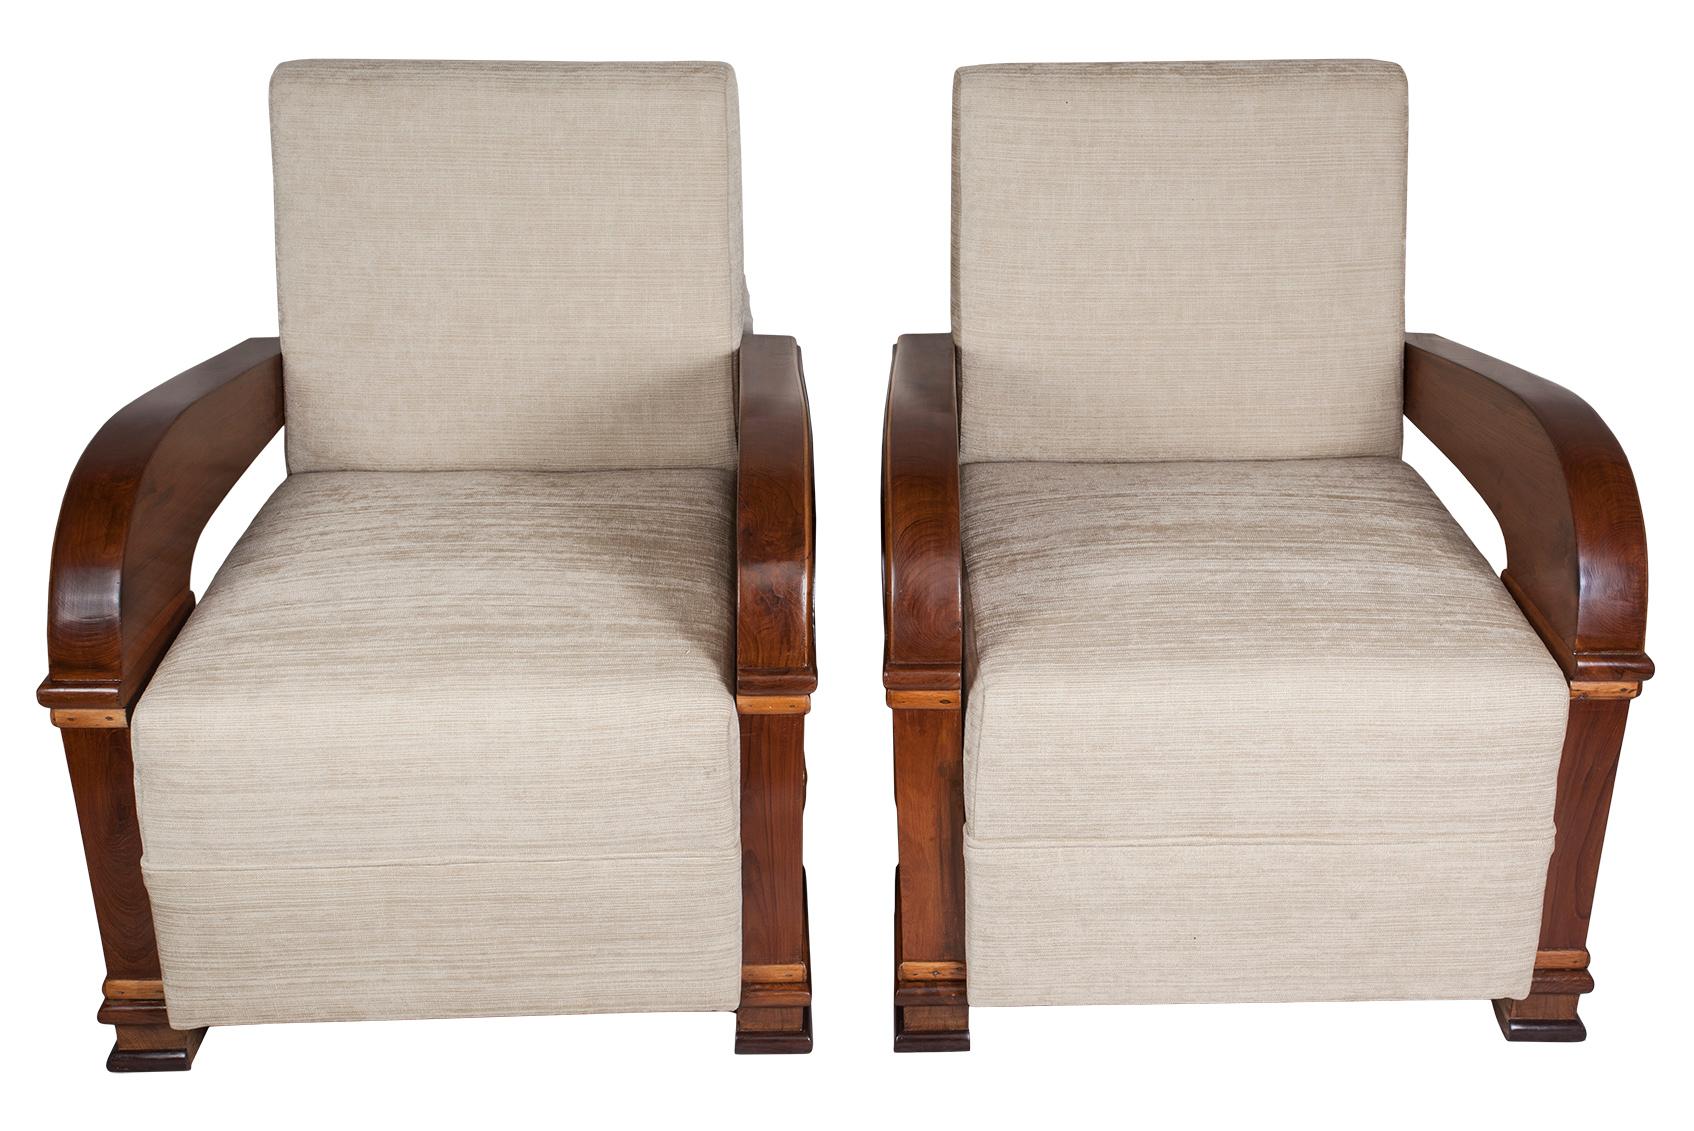 European Art Deco Upholstered Teak Living Room Set Comprised of Loveseat & Pair of Chairs